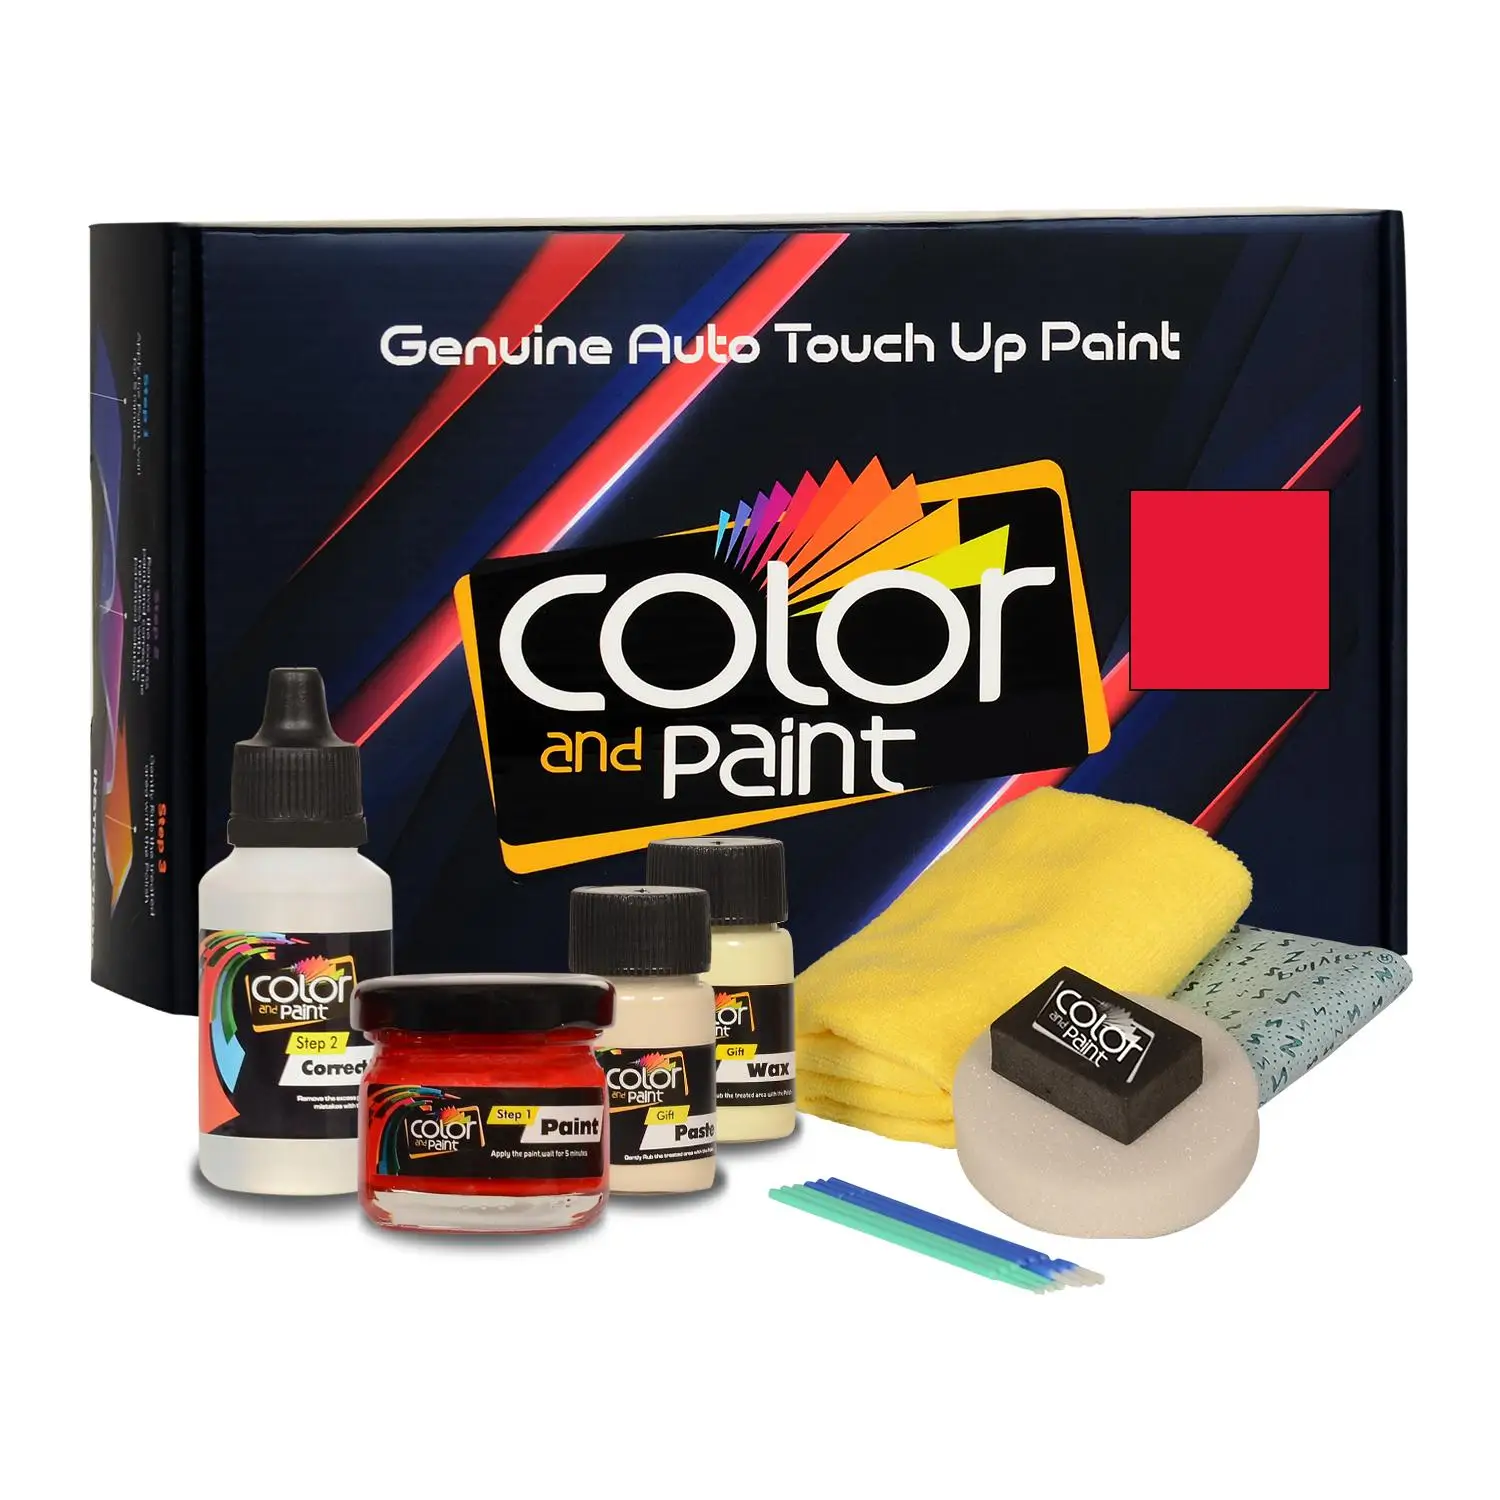 

Color and Paint compatible with Dodge Automotive Touch Up Paint - BORDEAUX SEMI-GLOSS - R8 - Basic Care